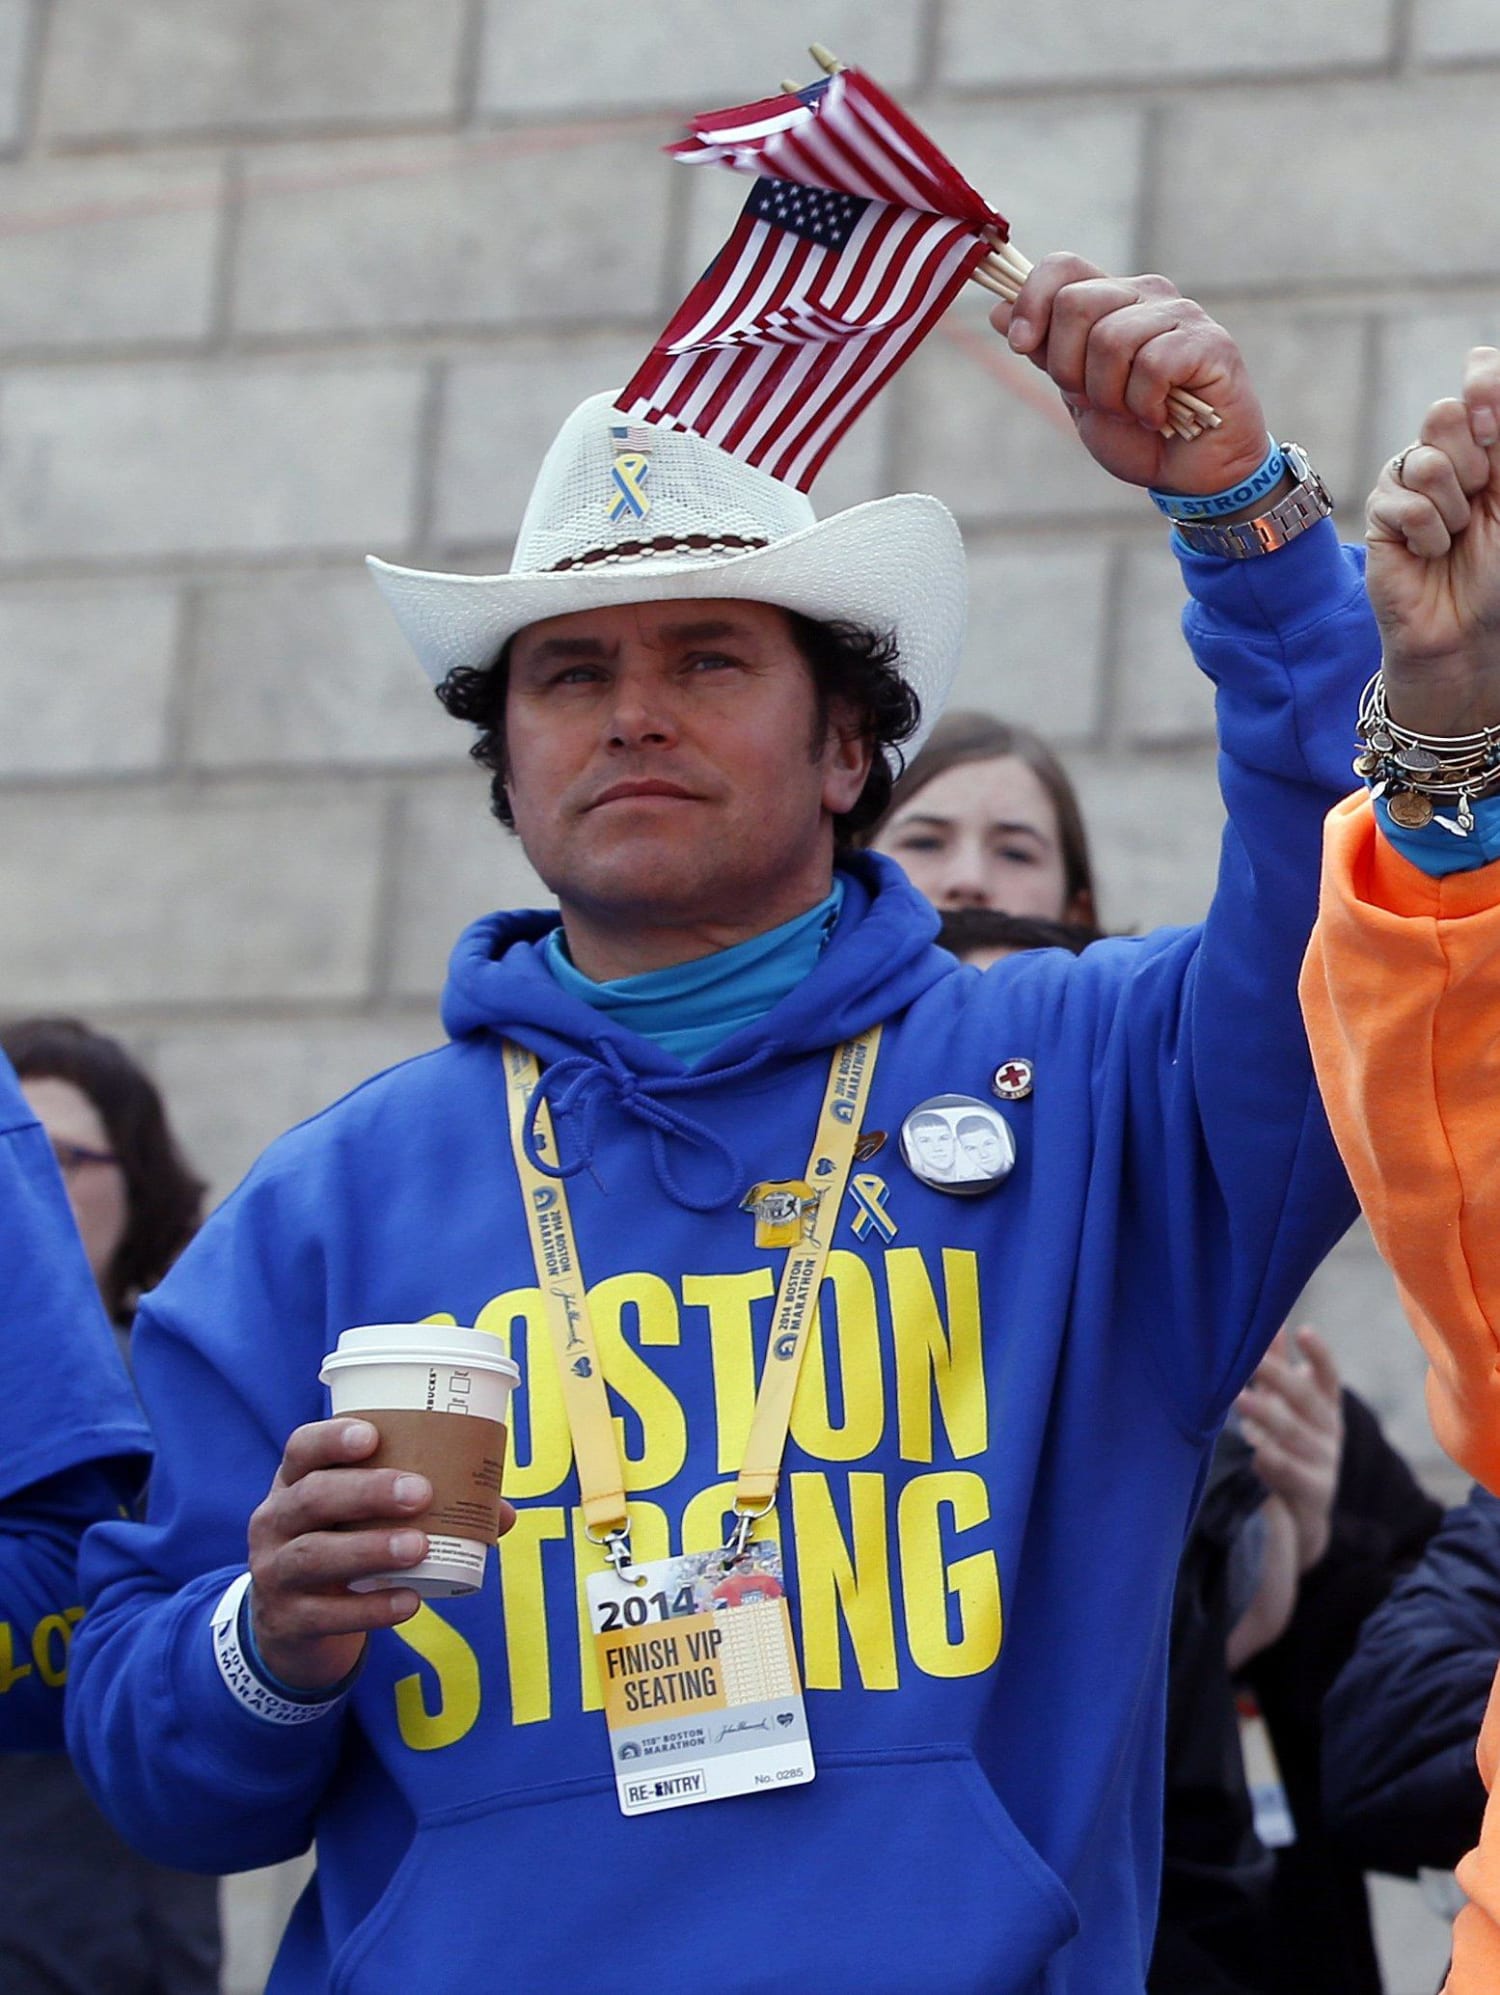 Spotted: Cowboy Hat 'Hero' at Boston Finish Line - NBC News